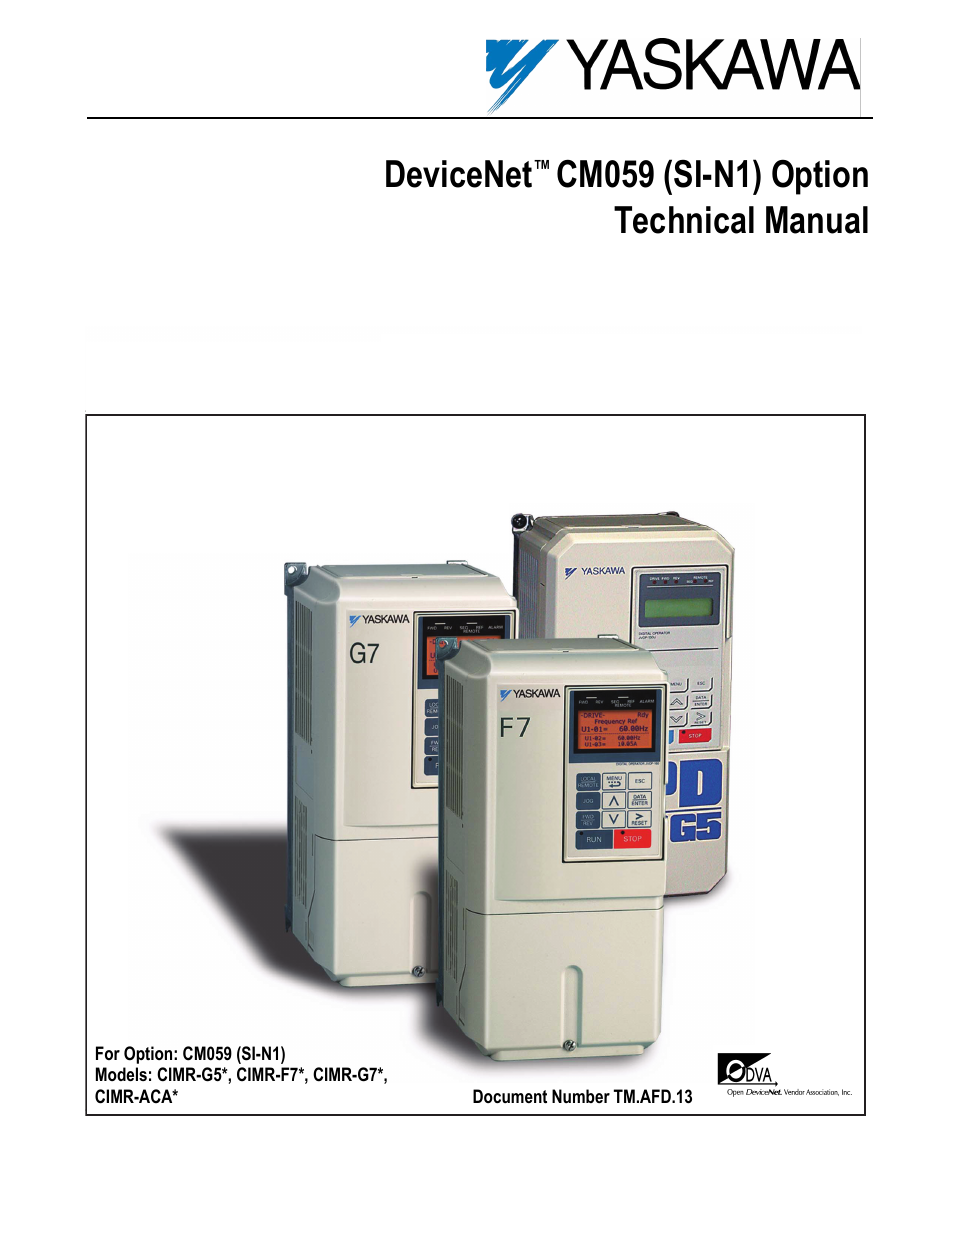 DeviceNet Option Card CM059